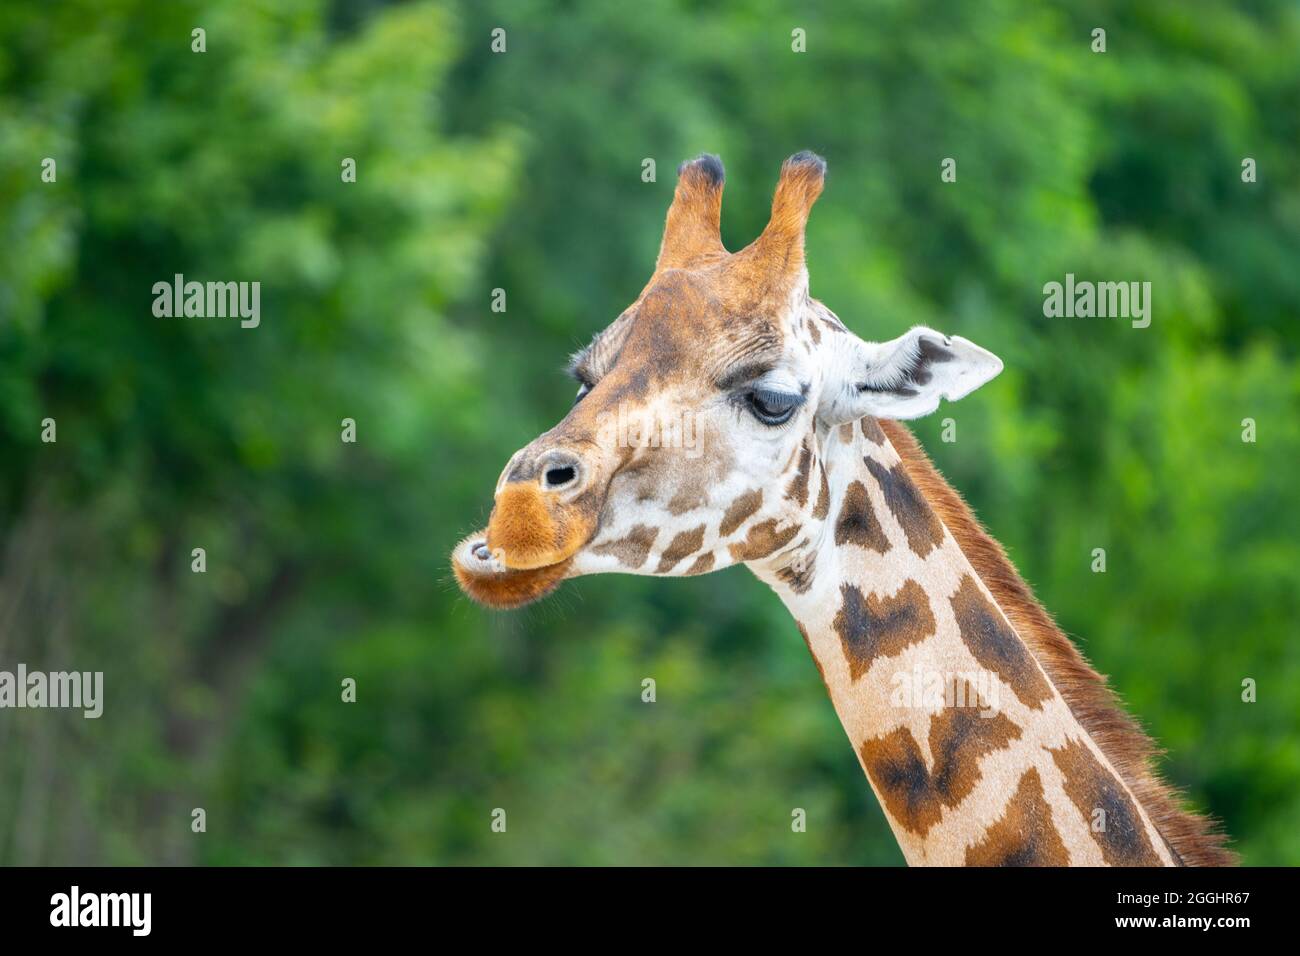 Cute giraffe portrait. Zoom close up photography. Stock Photo